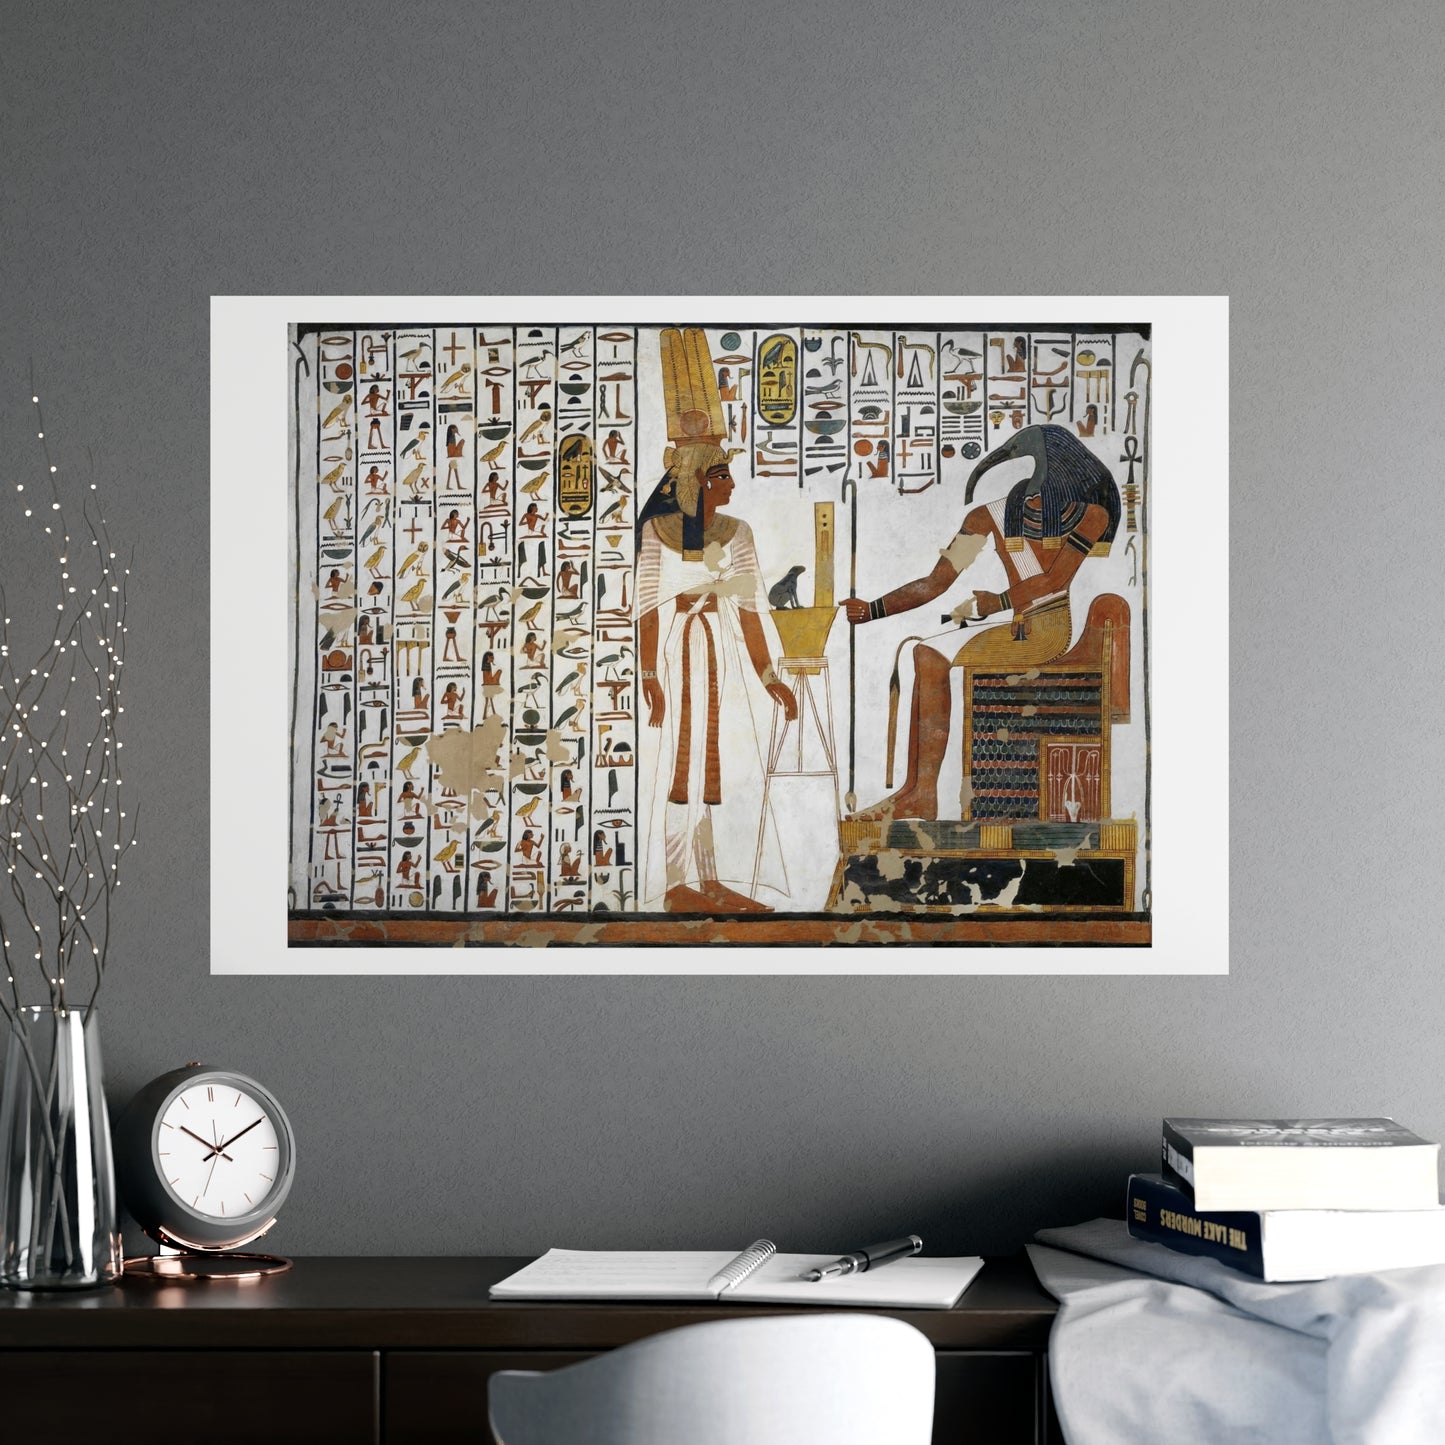 Queen Nefertari and the God Djehuti/Thoth - Wall Print